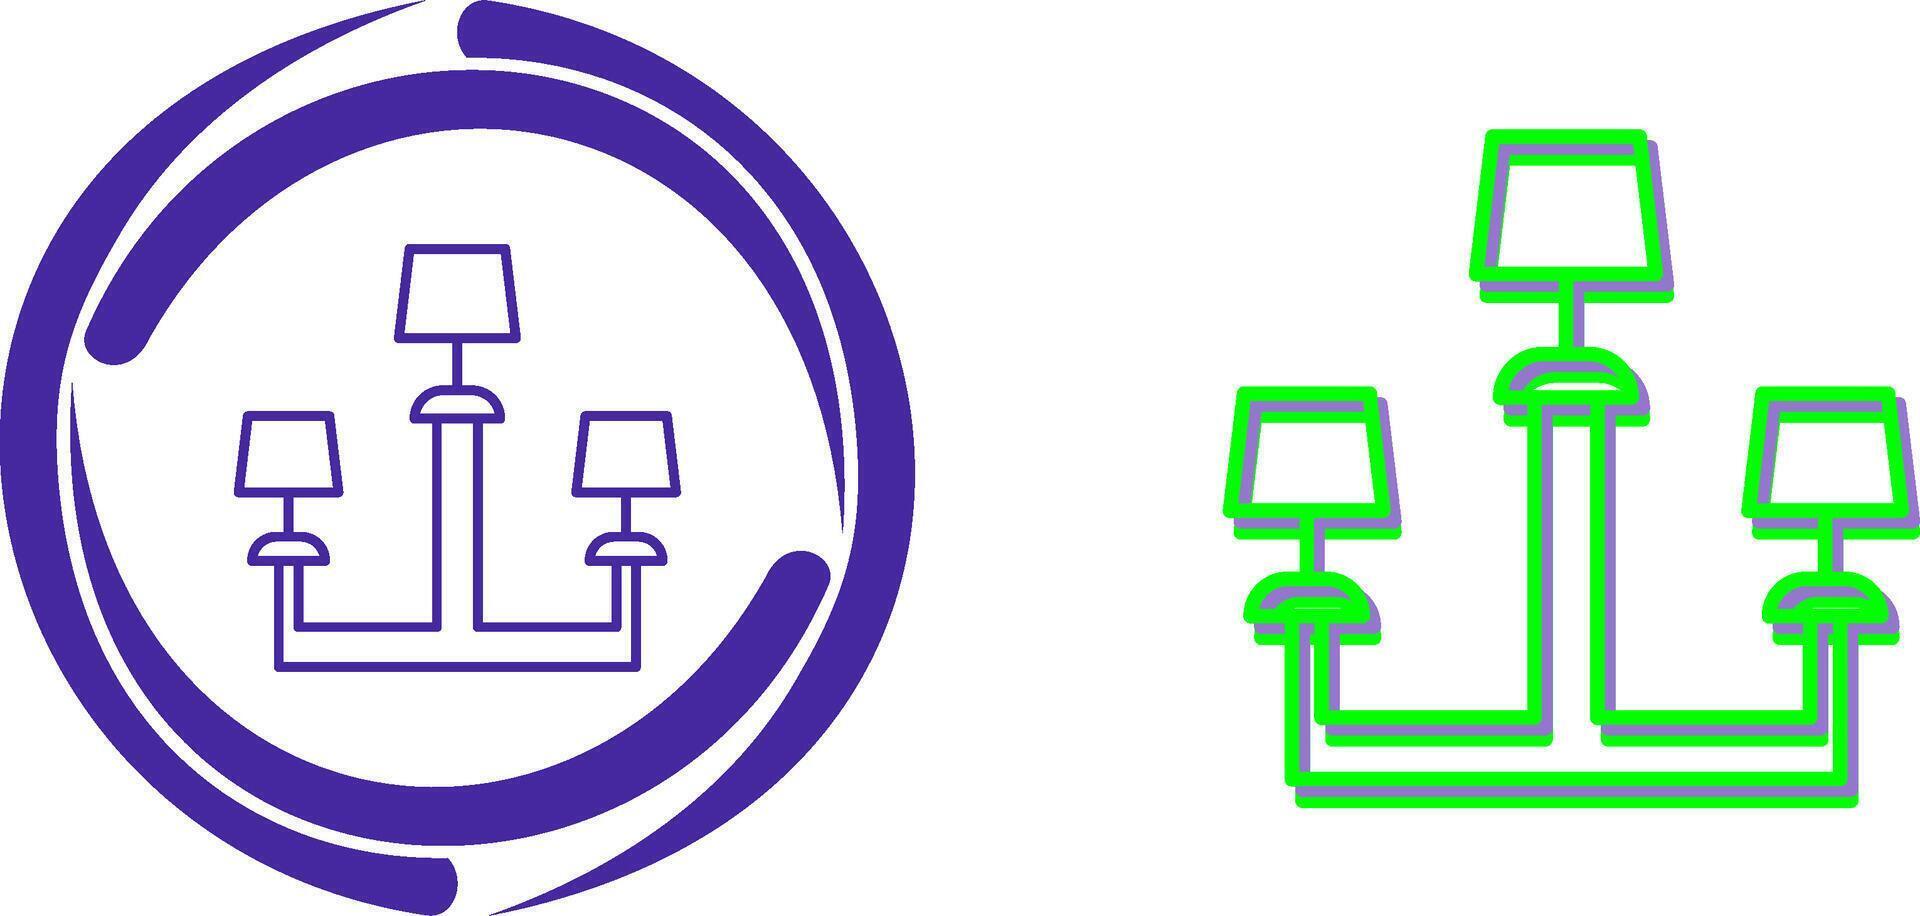 Lampen-Icon-Design vektor